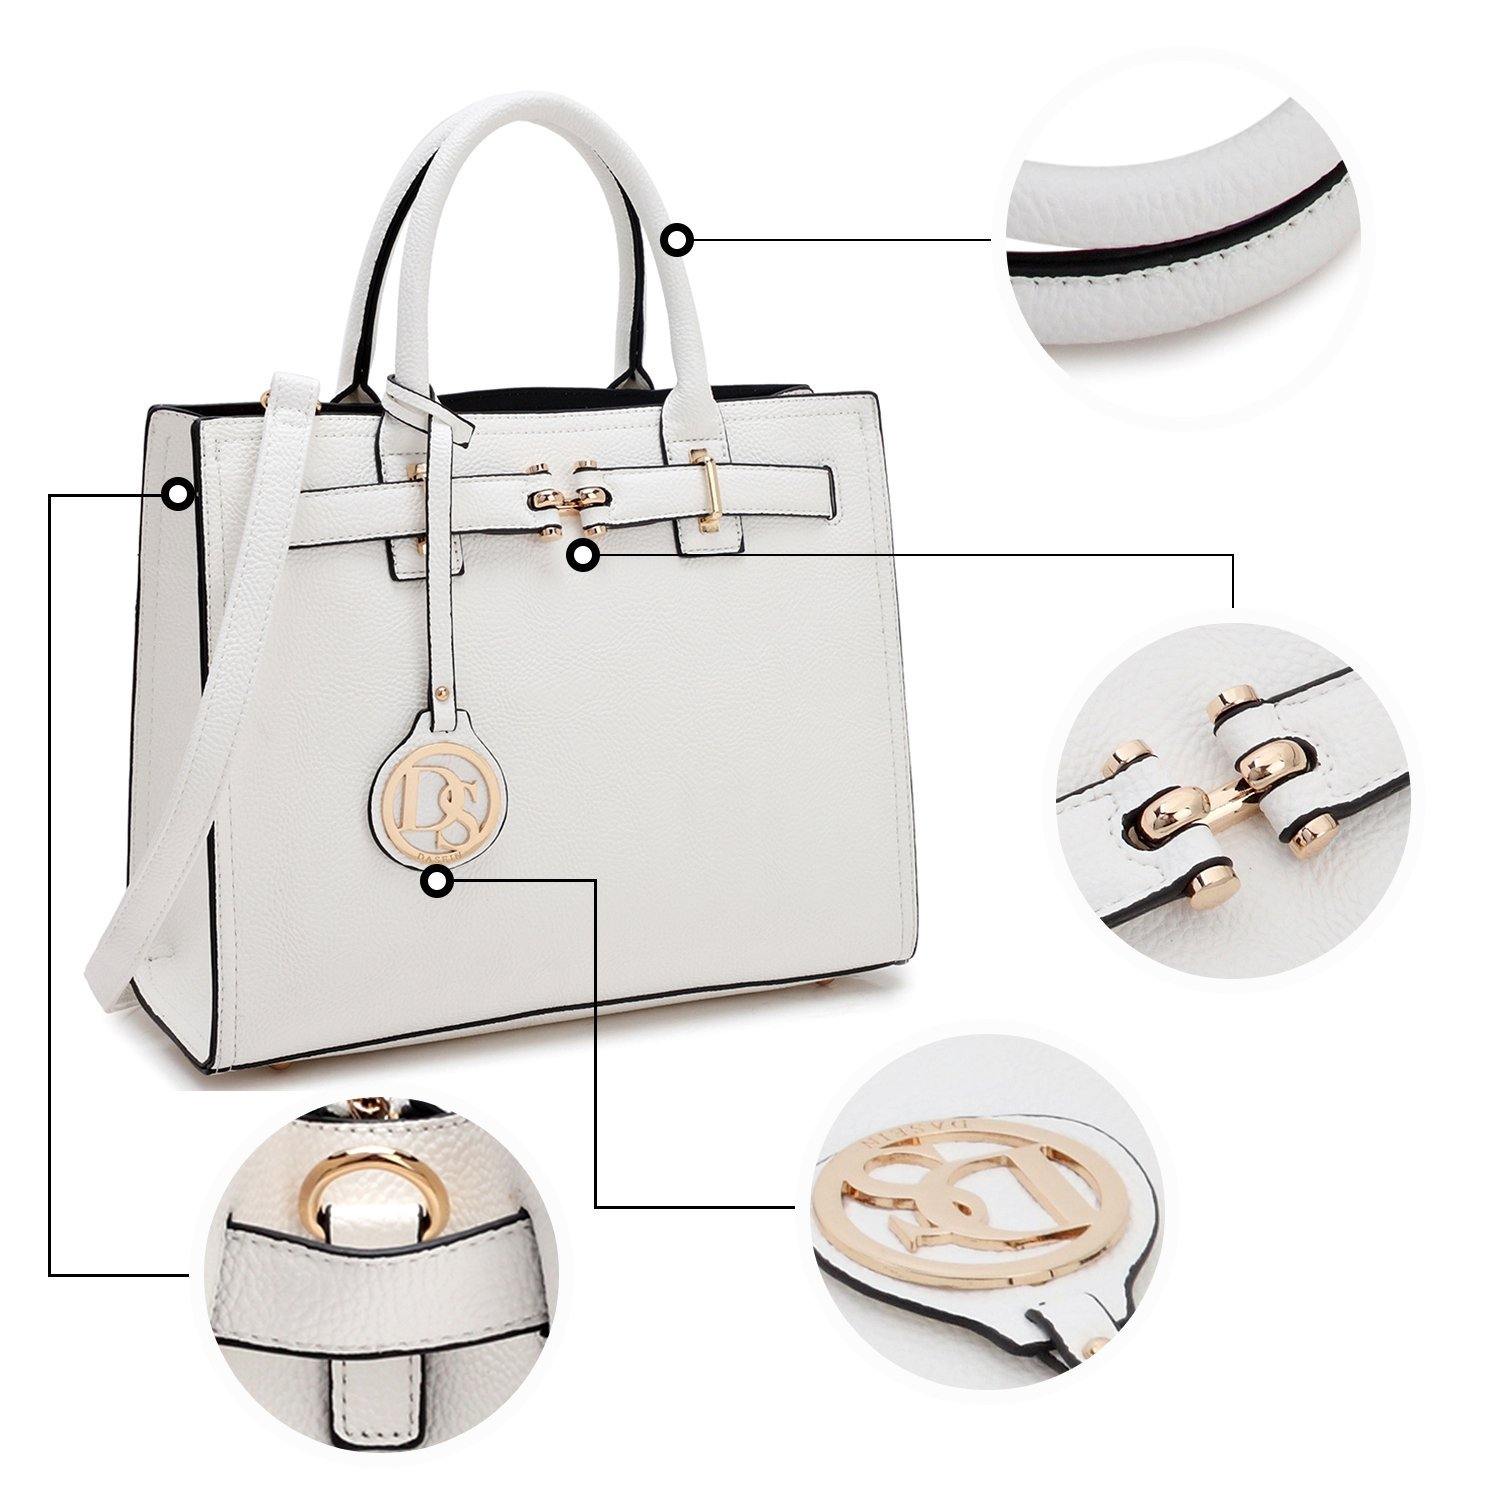 Genuine Leather Handbags Tote Shoulder Bag for Woman Satchel Designer Purse  Top Handles Crossbody Bag,White with black，G141517